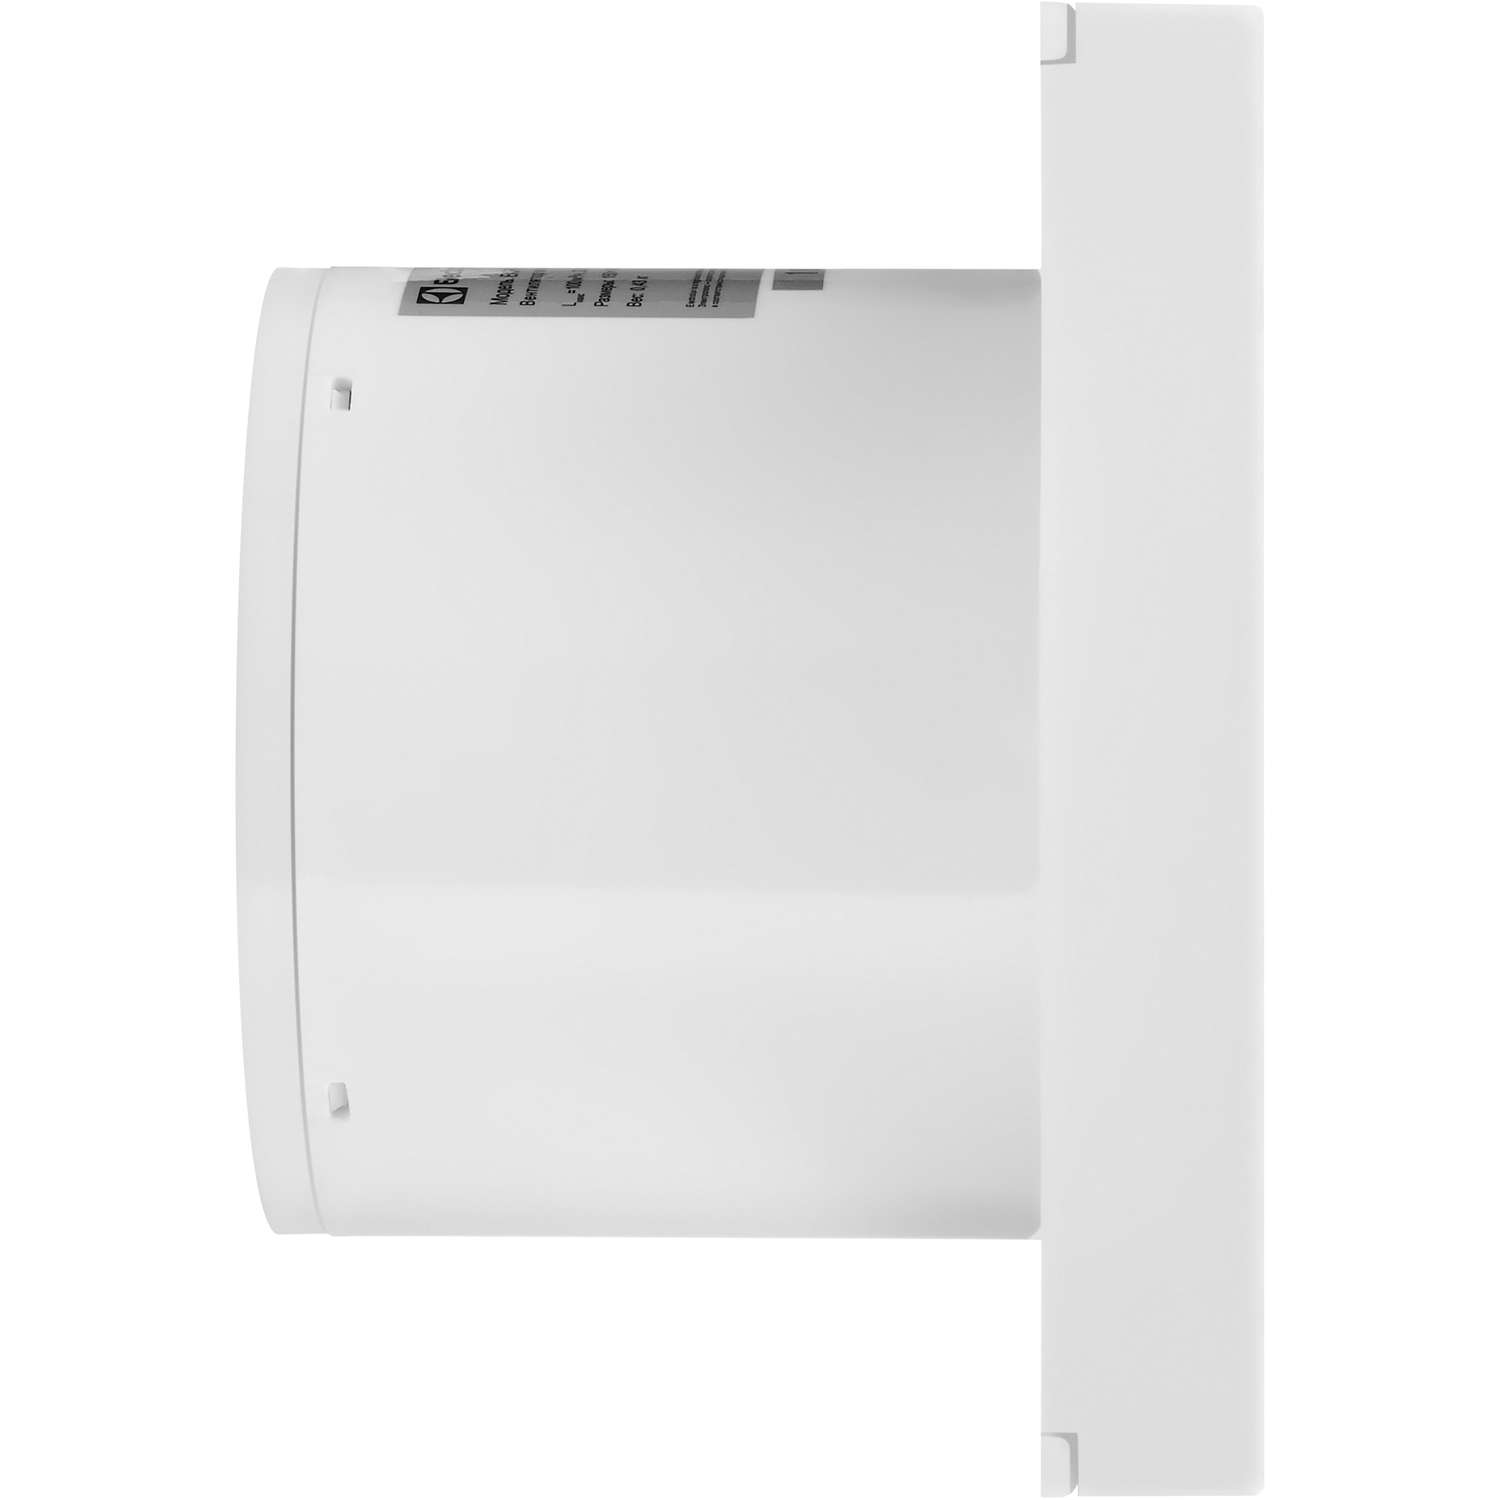 Вентилятор вытяжной Electrolux EAFR-150 white - фото 3